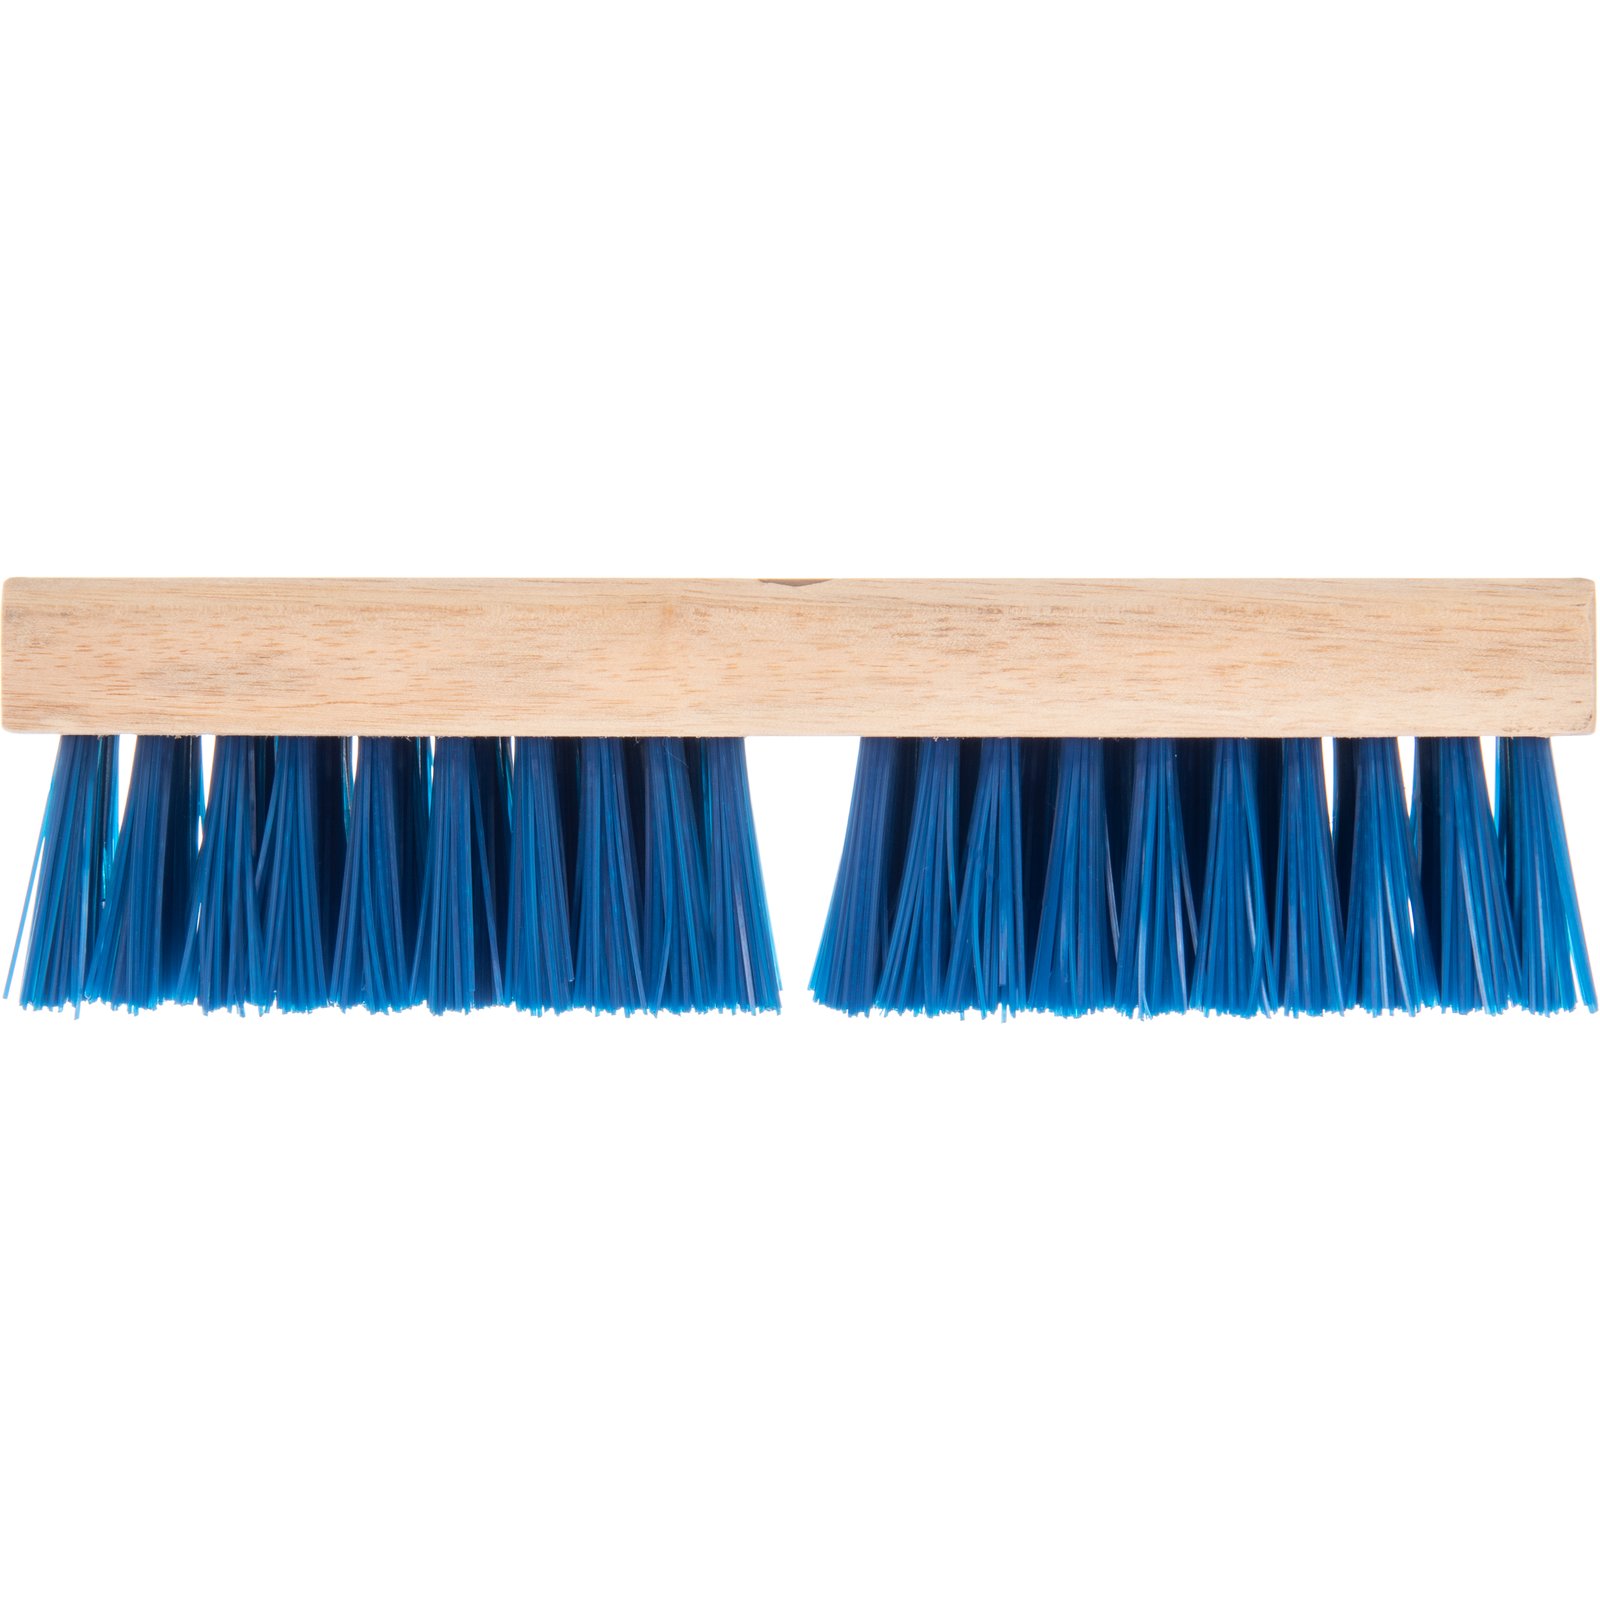 Professional Wood Block Deck Scrub Brush